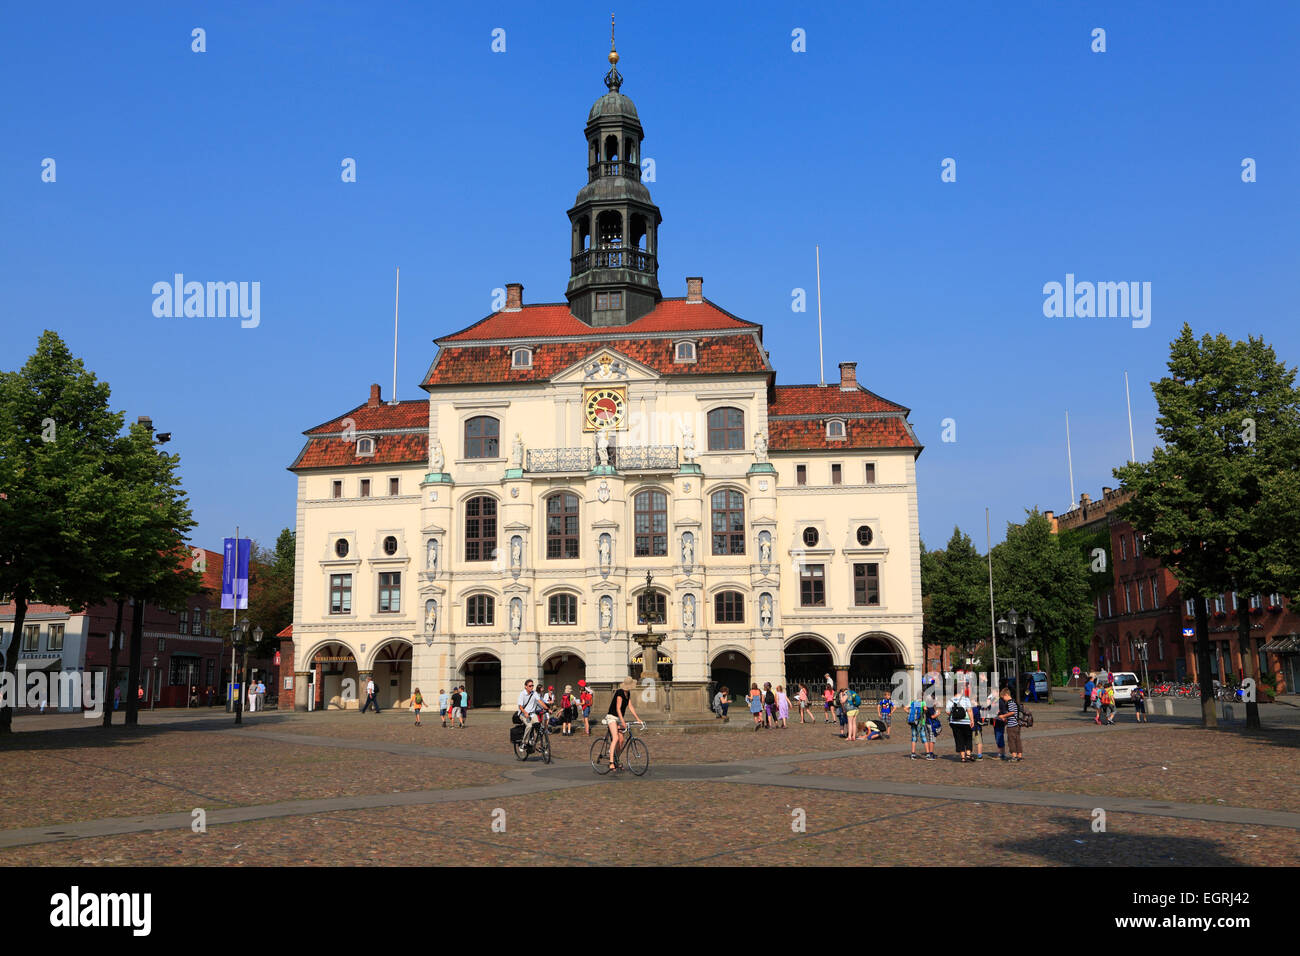 Town hall and market square, Lueneburg,  Lüneburg, Lower Saxony, Germany, Europe Stock Photo